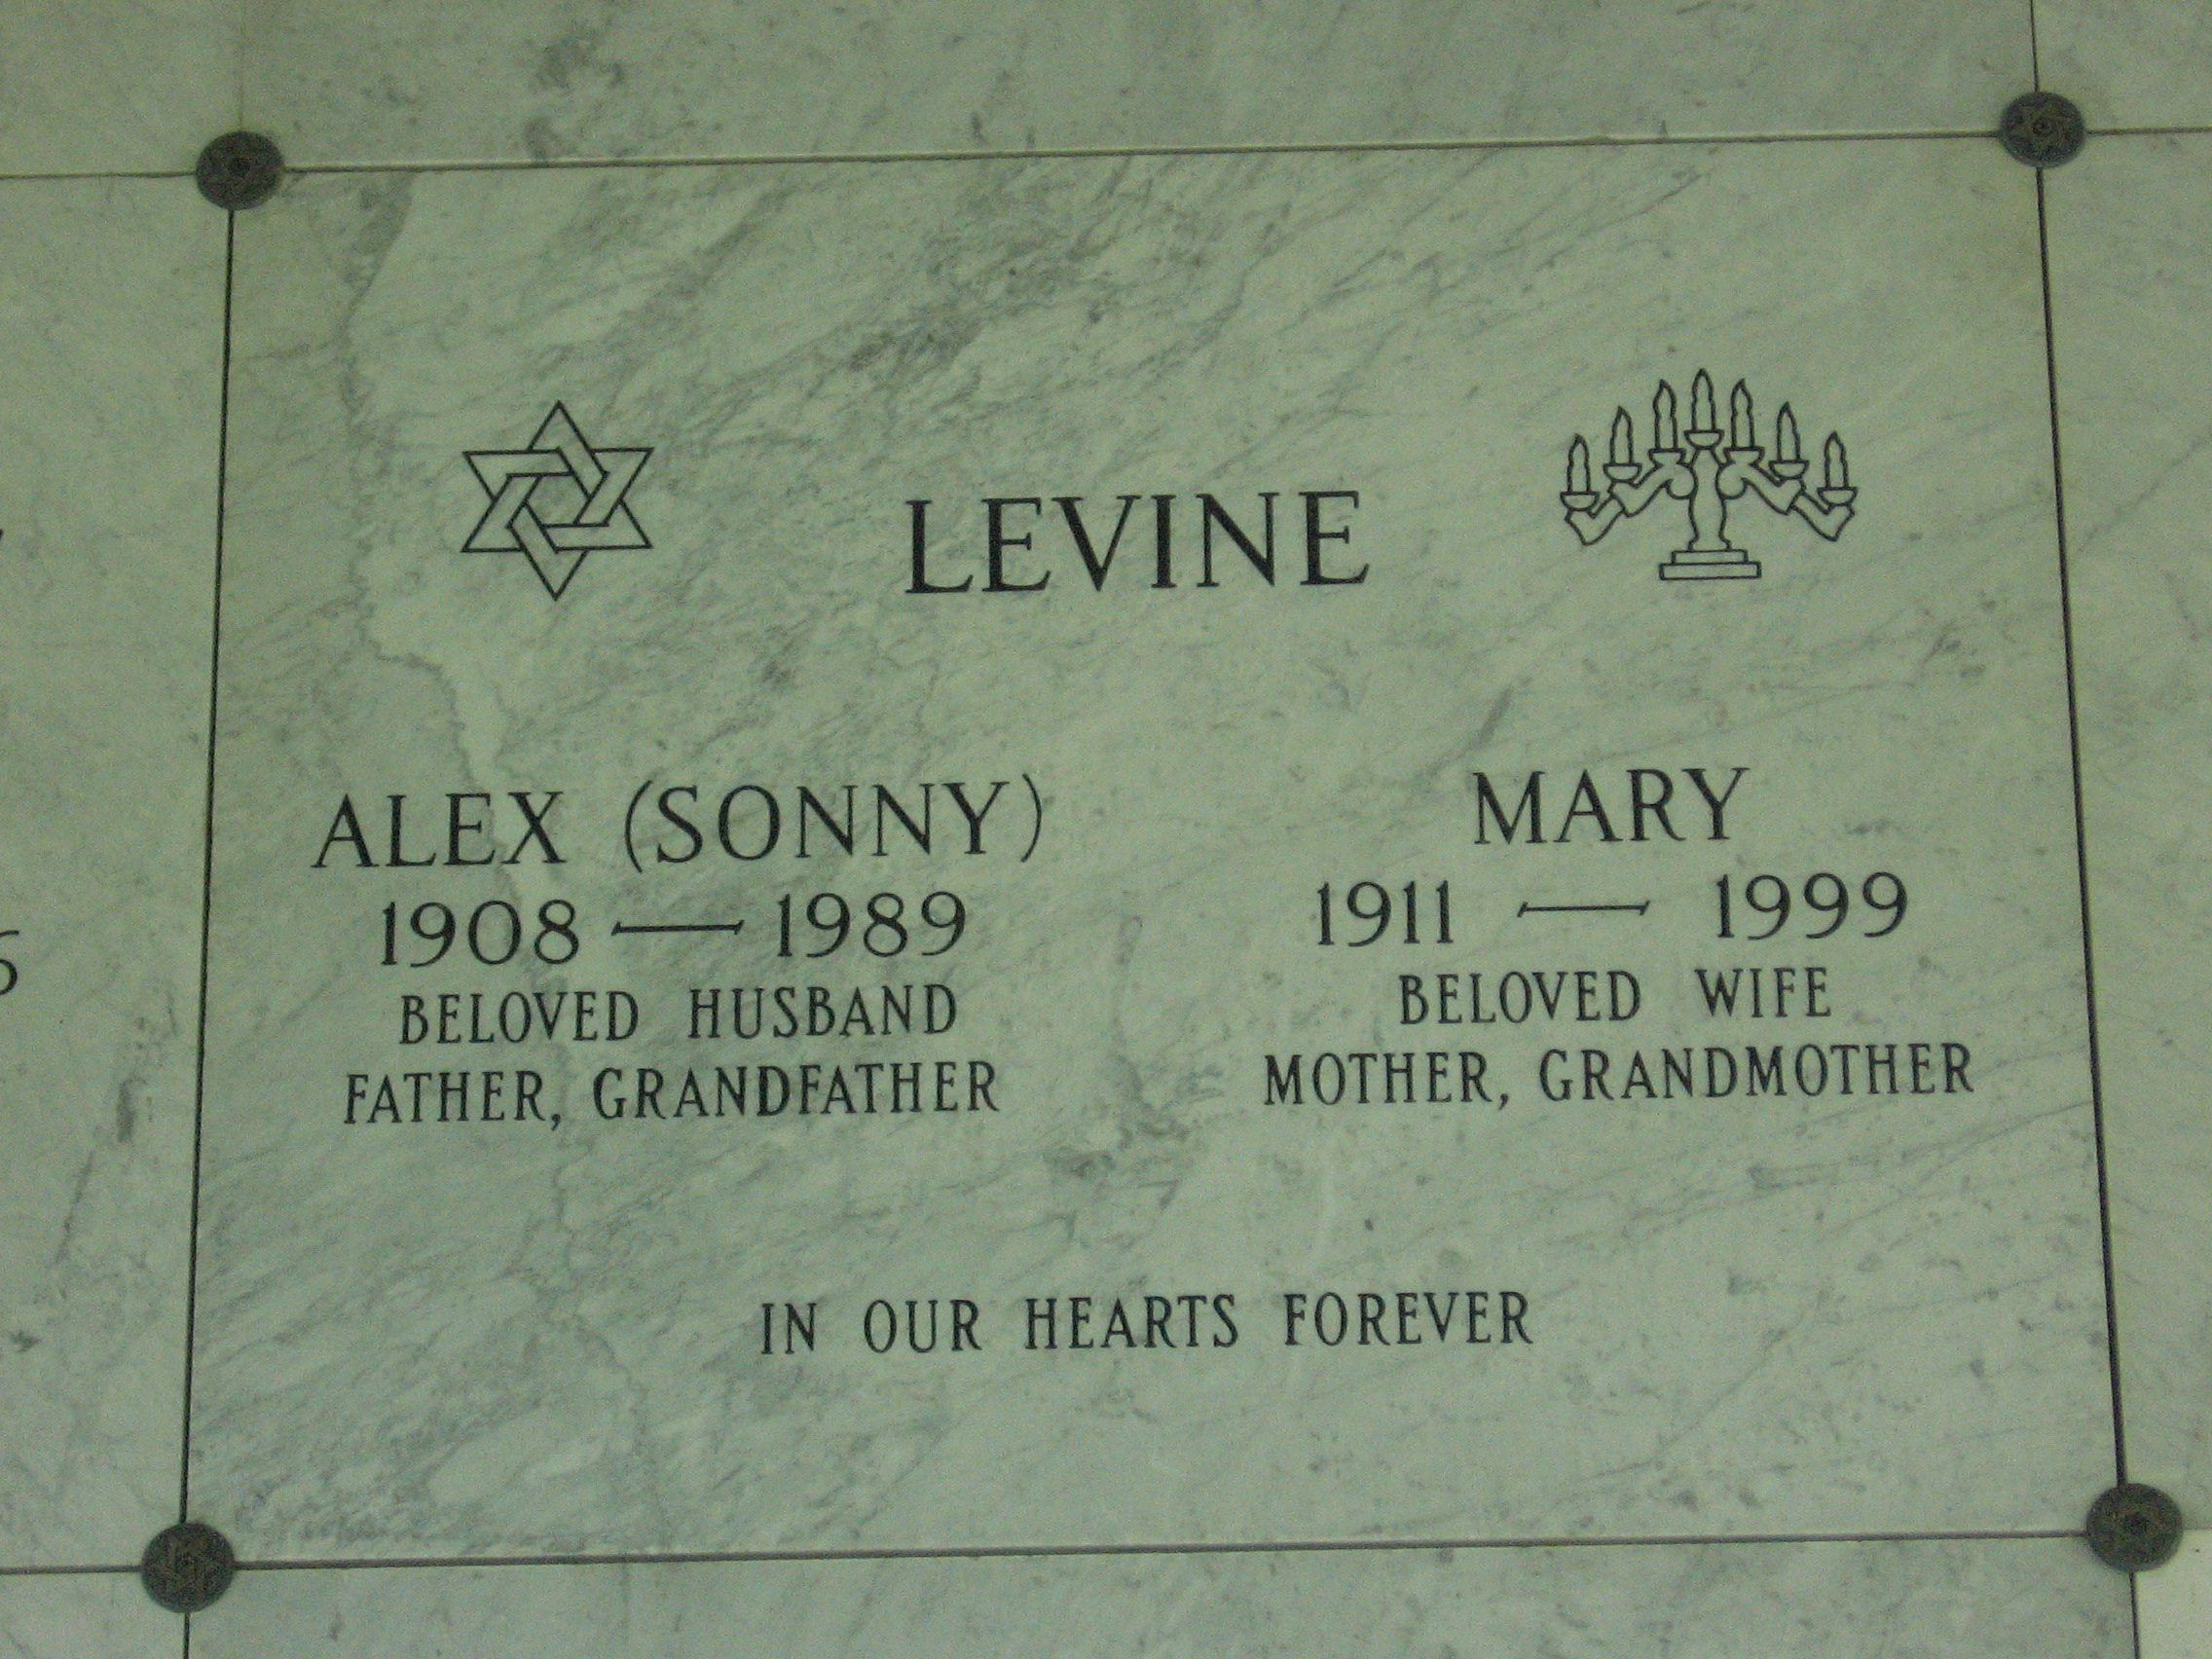 Alex "Sonny" Levine